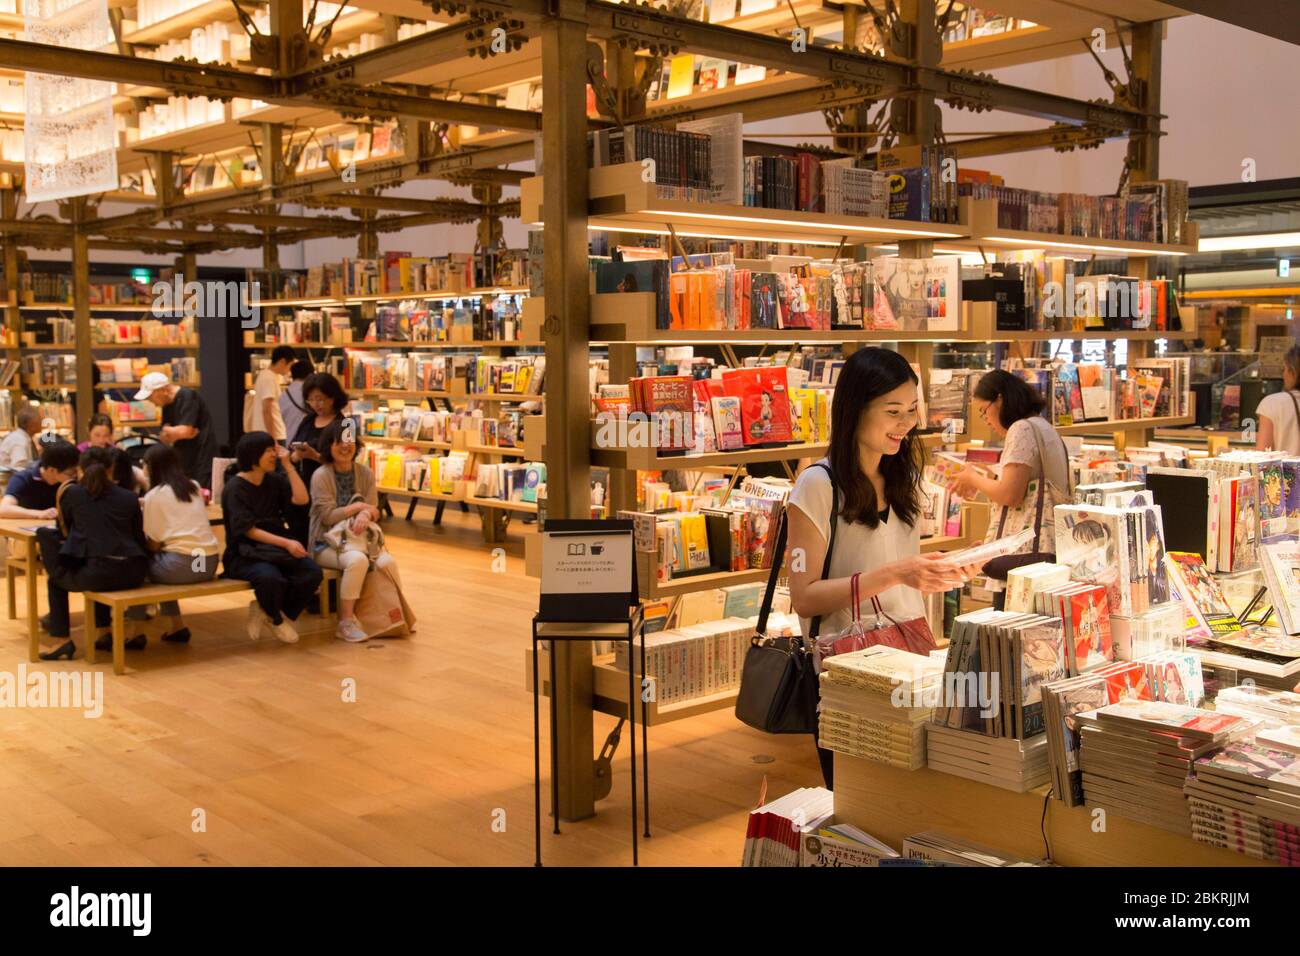 Japan, Honshu Island, Kanto region, Tokyo, Ginza, Ginza Six, the most garnd shopping complex in the district, Tsutaya Books, bookstore Stock Photo